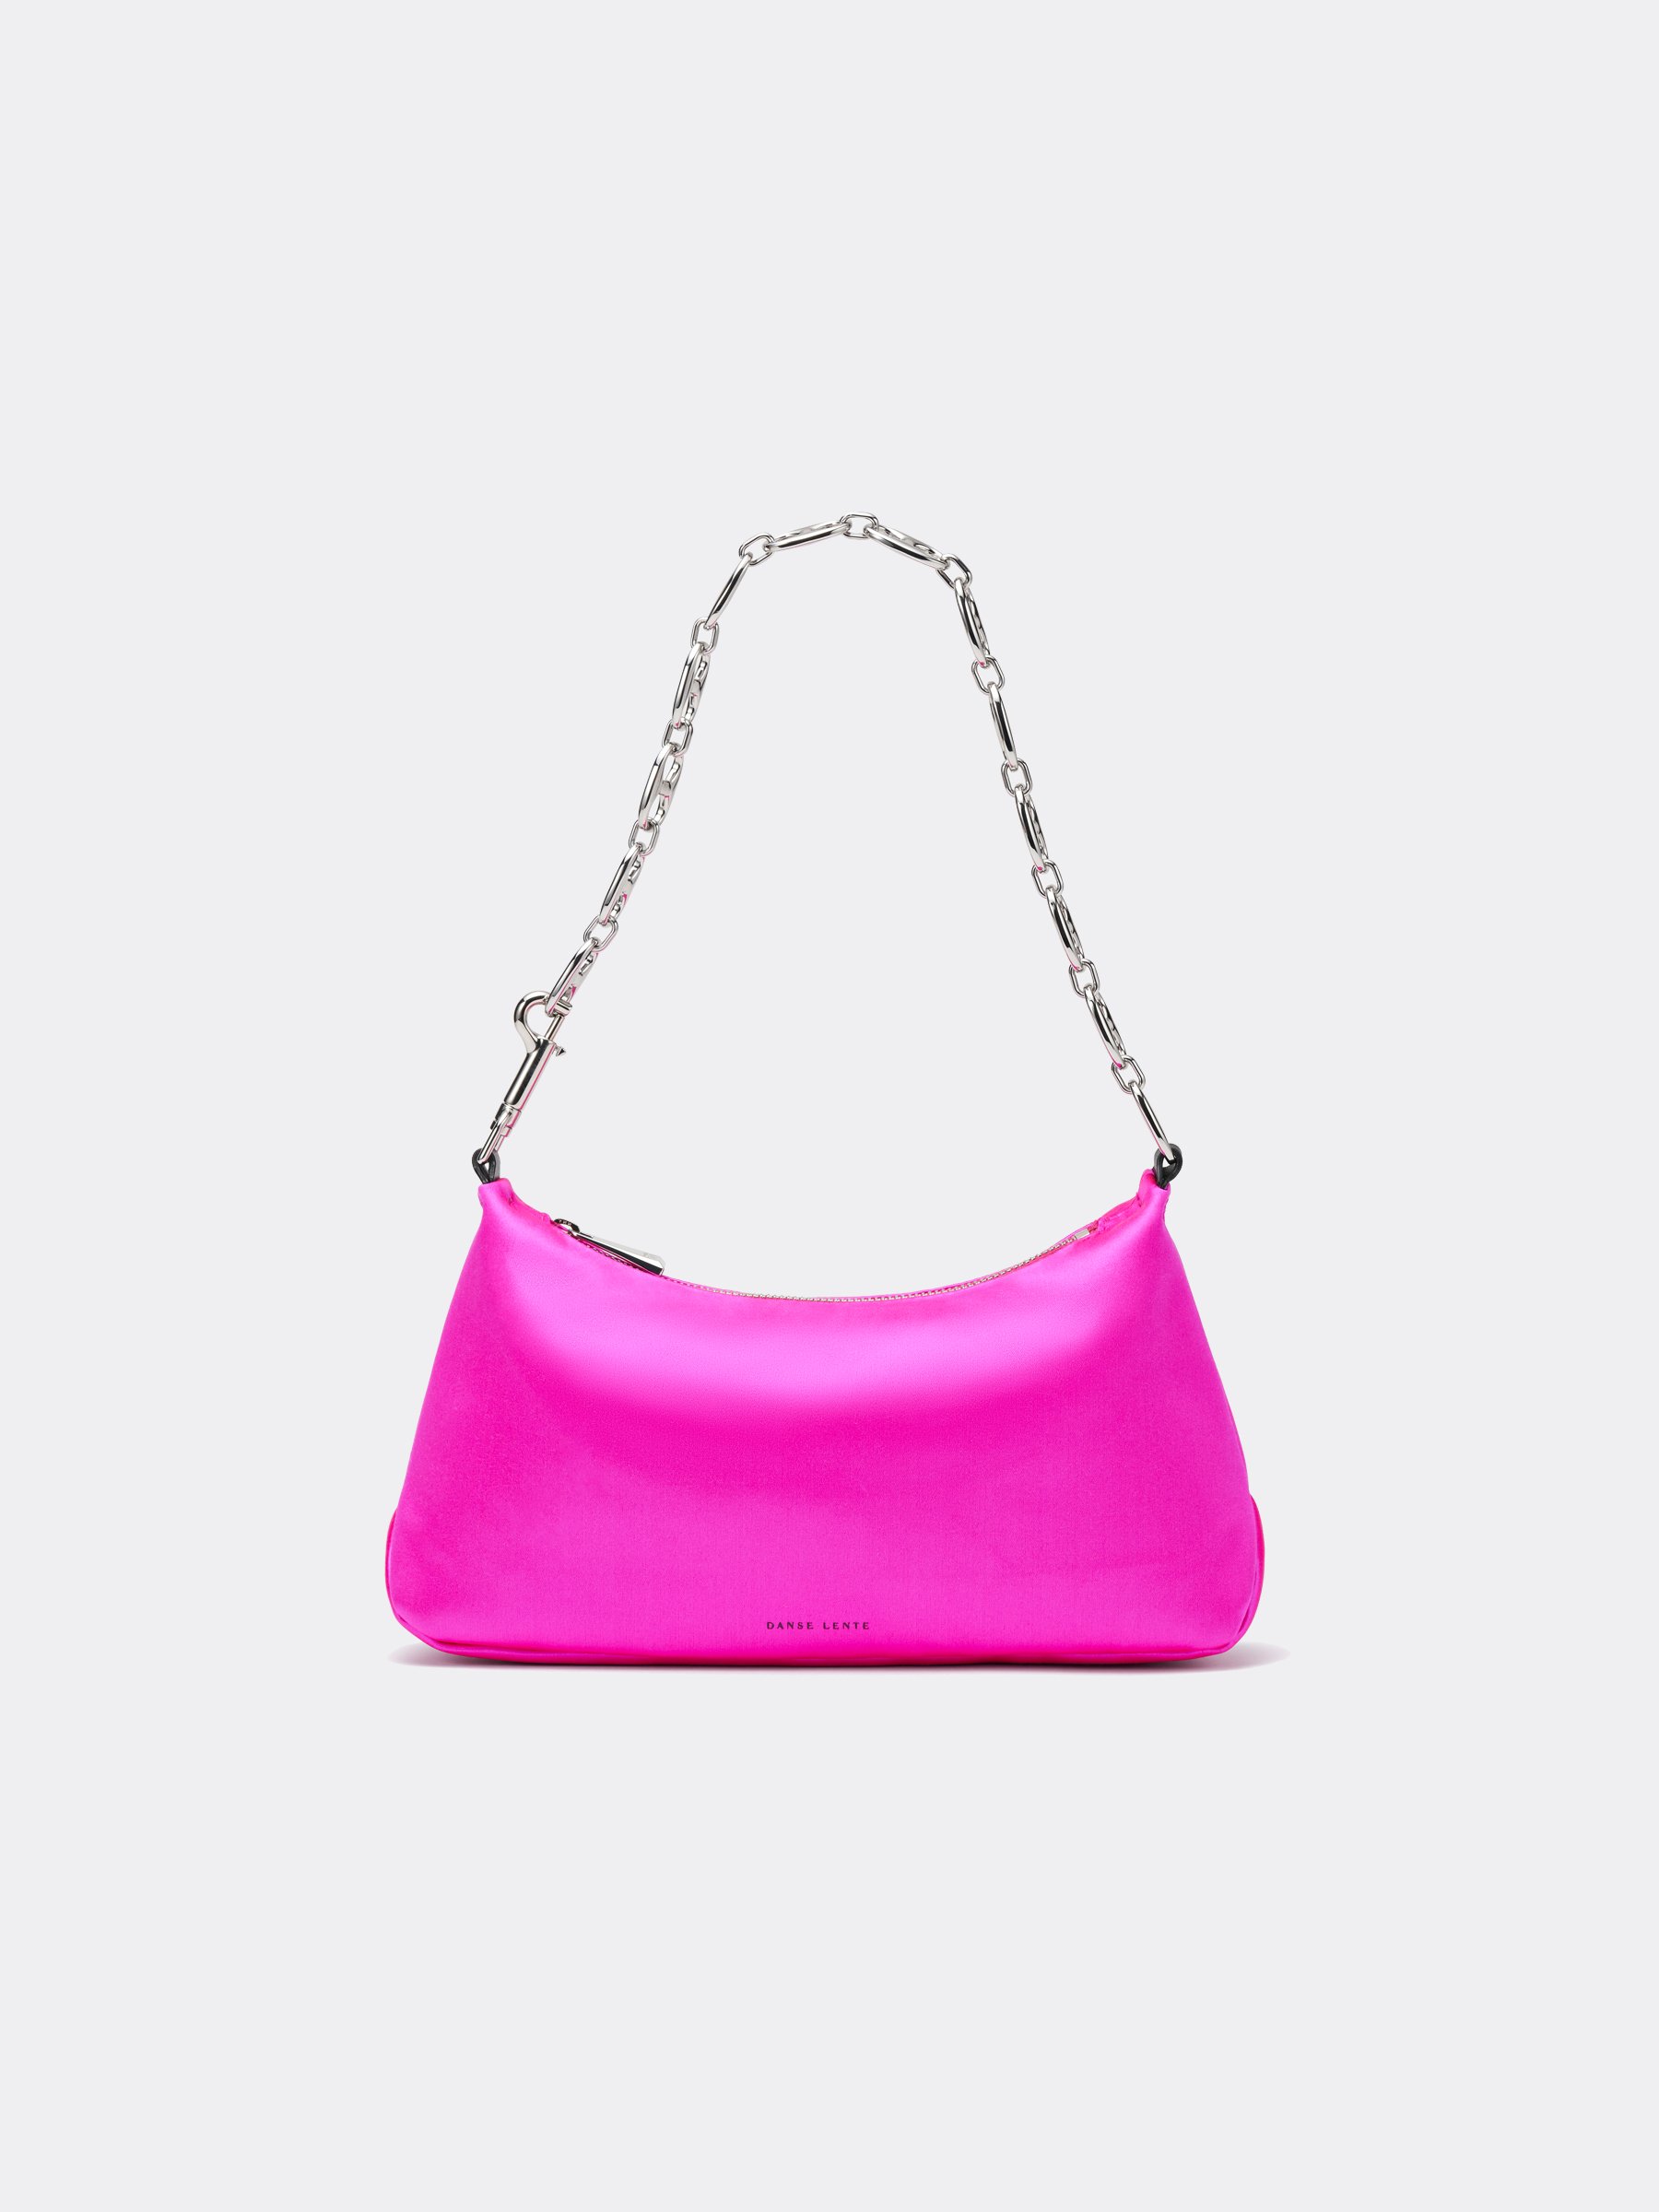 Take Me Out Tiny Totes Miniature Fashion Handbags with Purse-onality Basic Fun